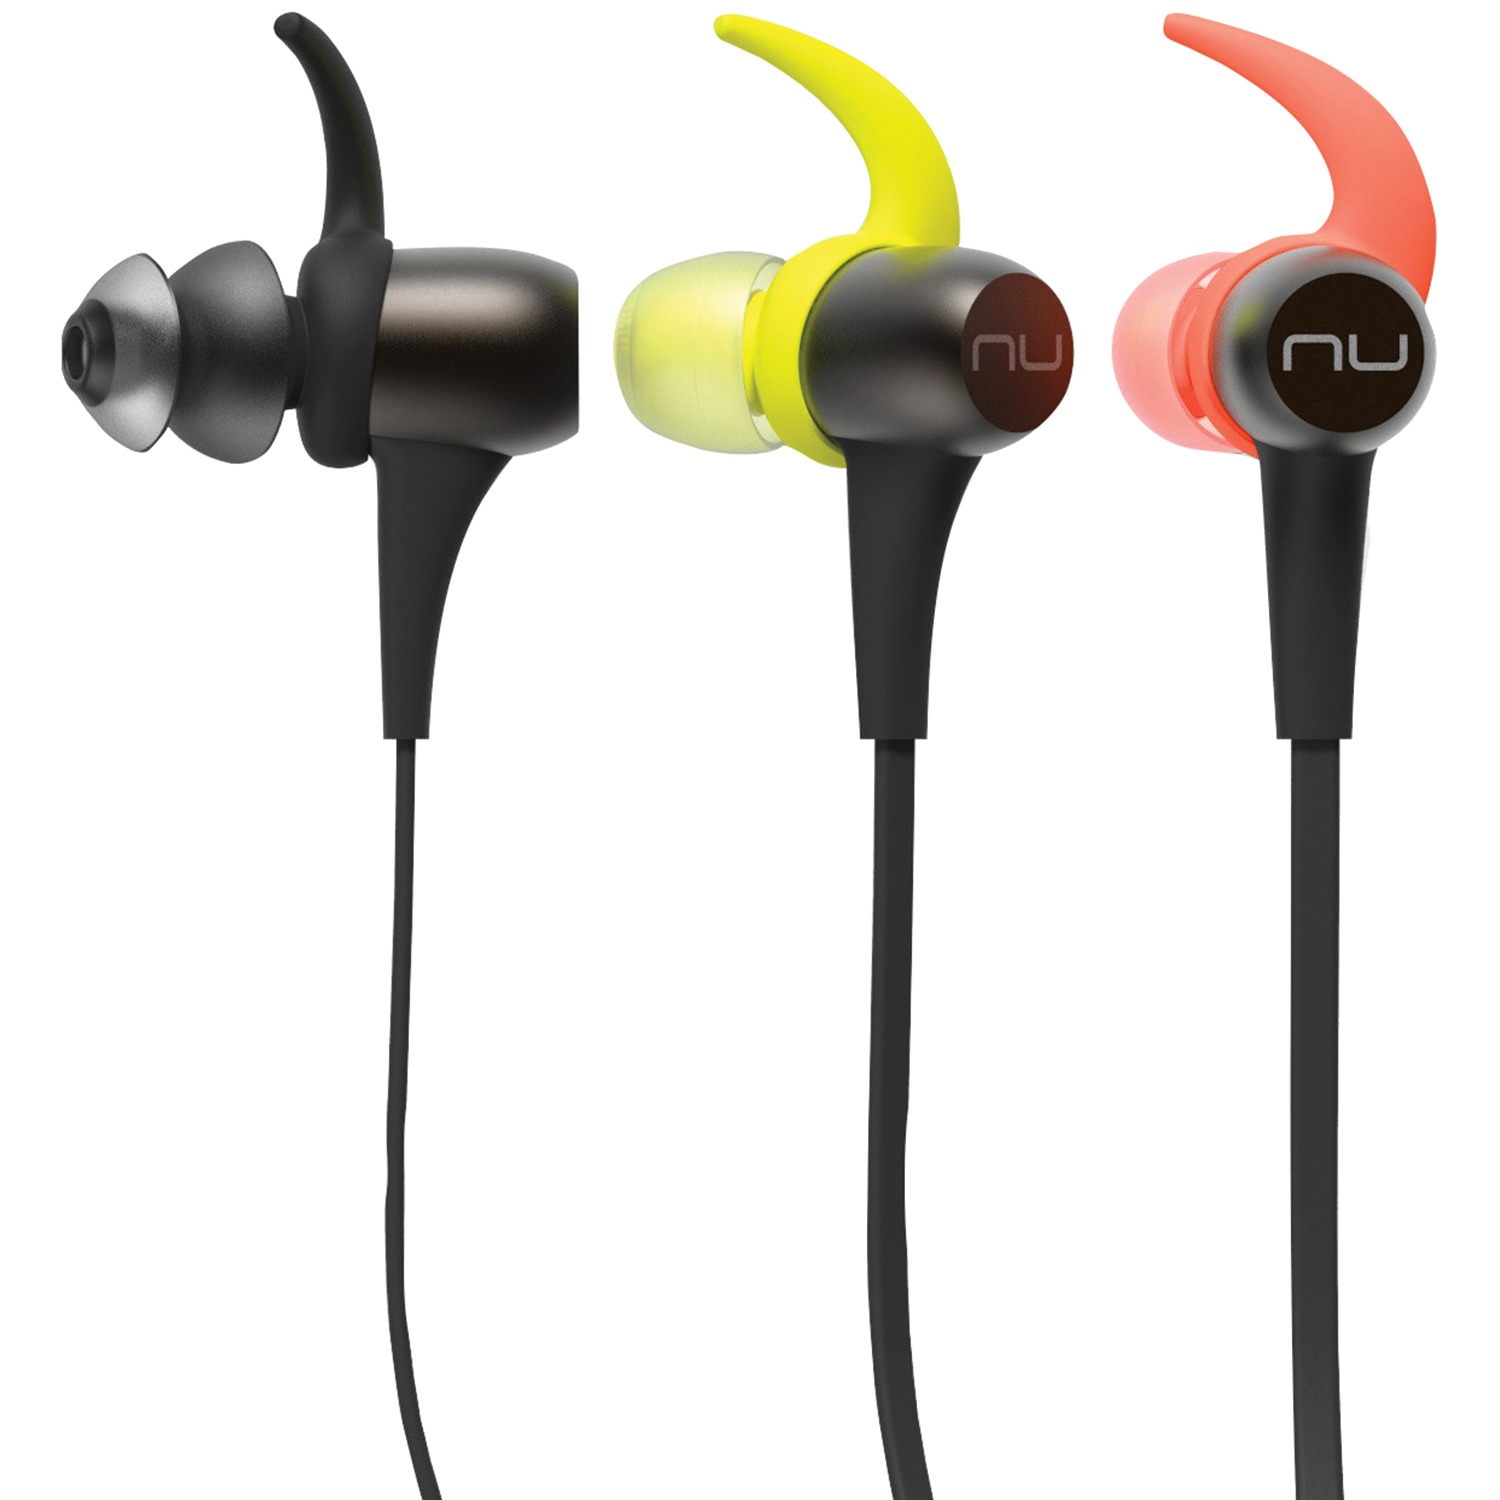 NuForce Bluetooth Sports In-EarHeadphones, Black, BESPORT3 - image 5 of 8